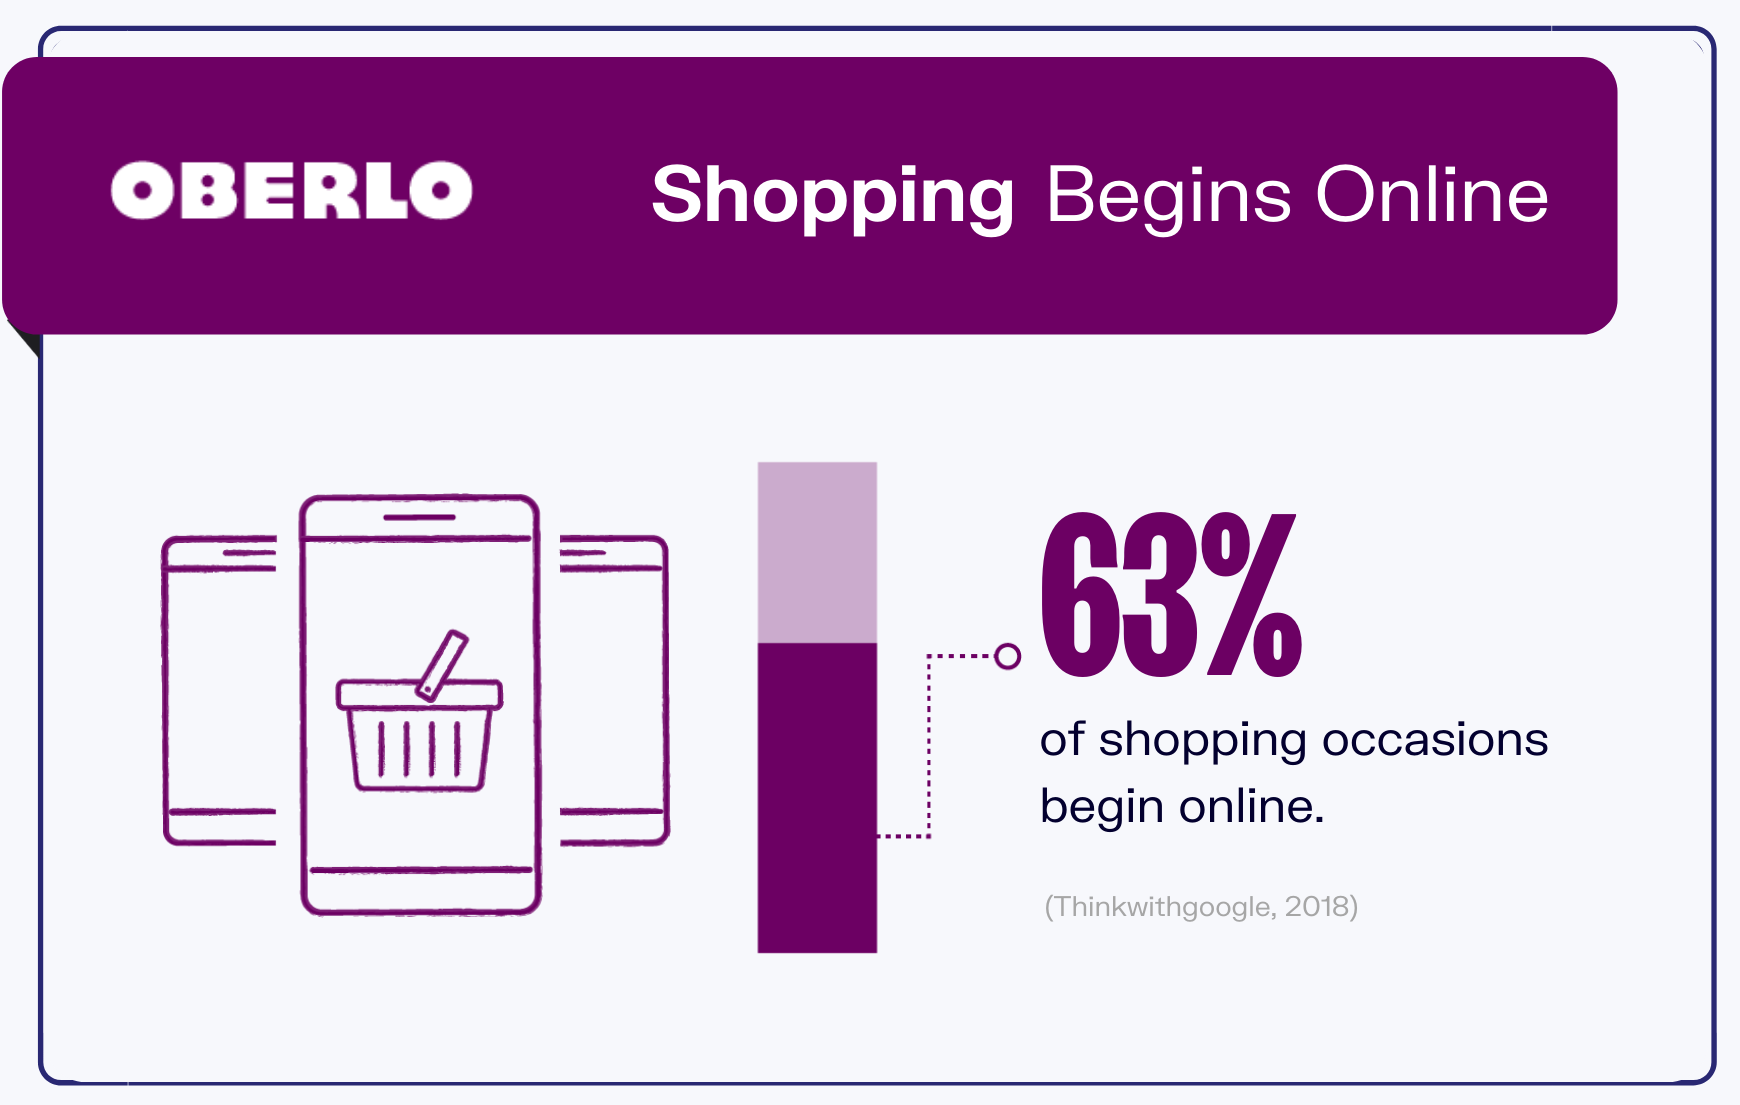 online shopping statistics graphic 2